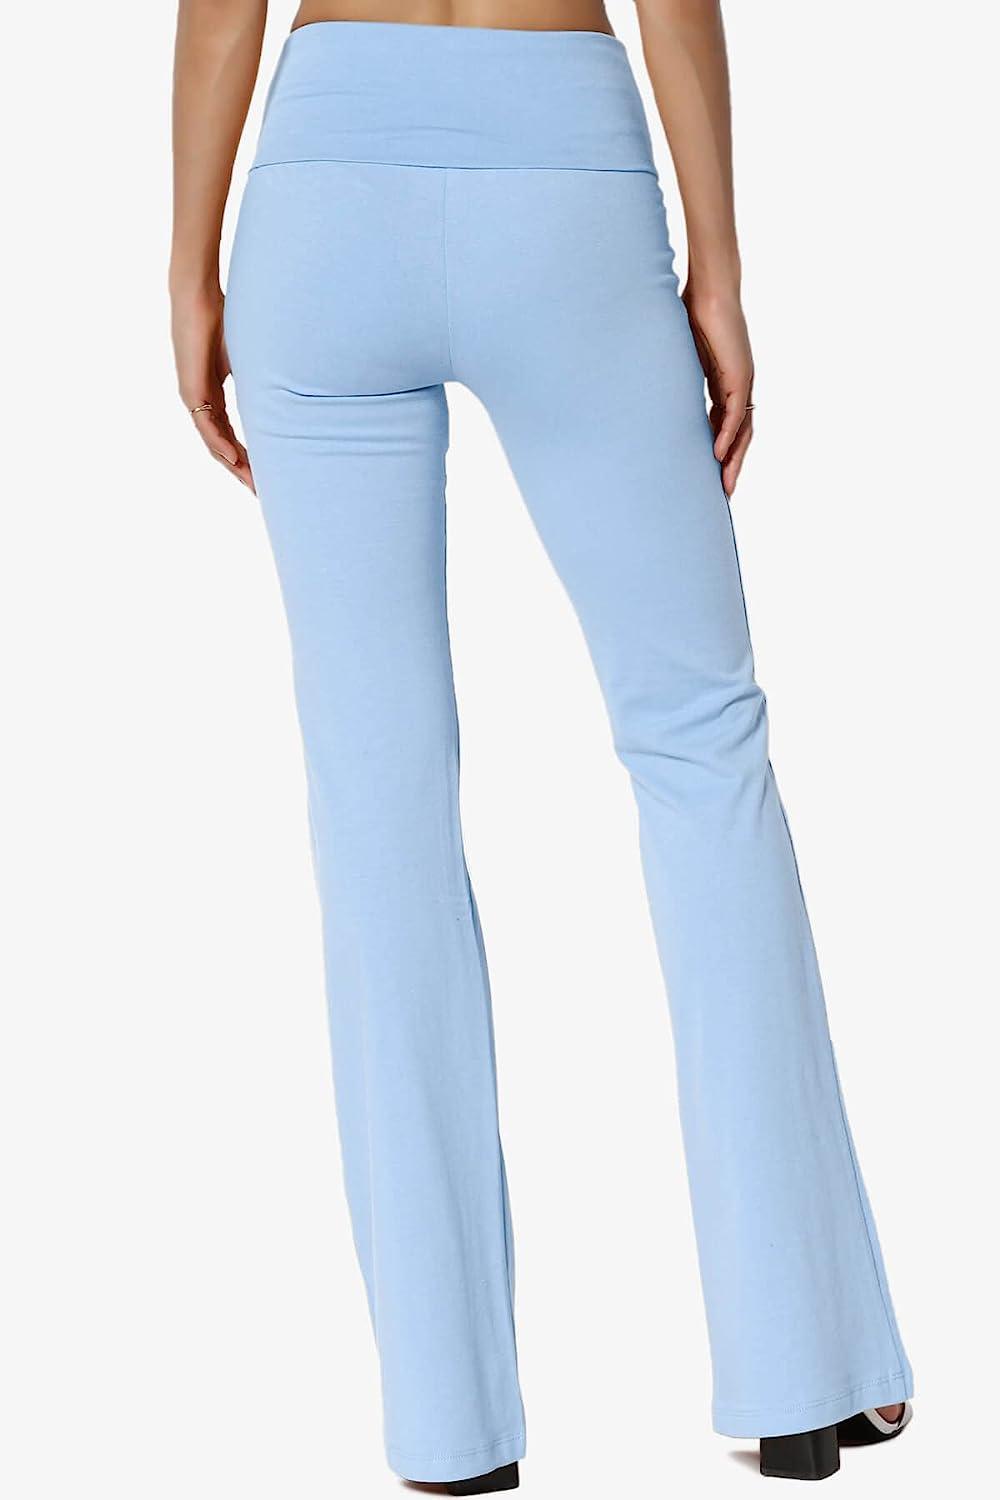 TheMogan Women's Basic Foldover Waistband Comfy Stretch Cotton Boot Cut  Lounge Yoga Pants Large Light Blue